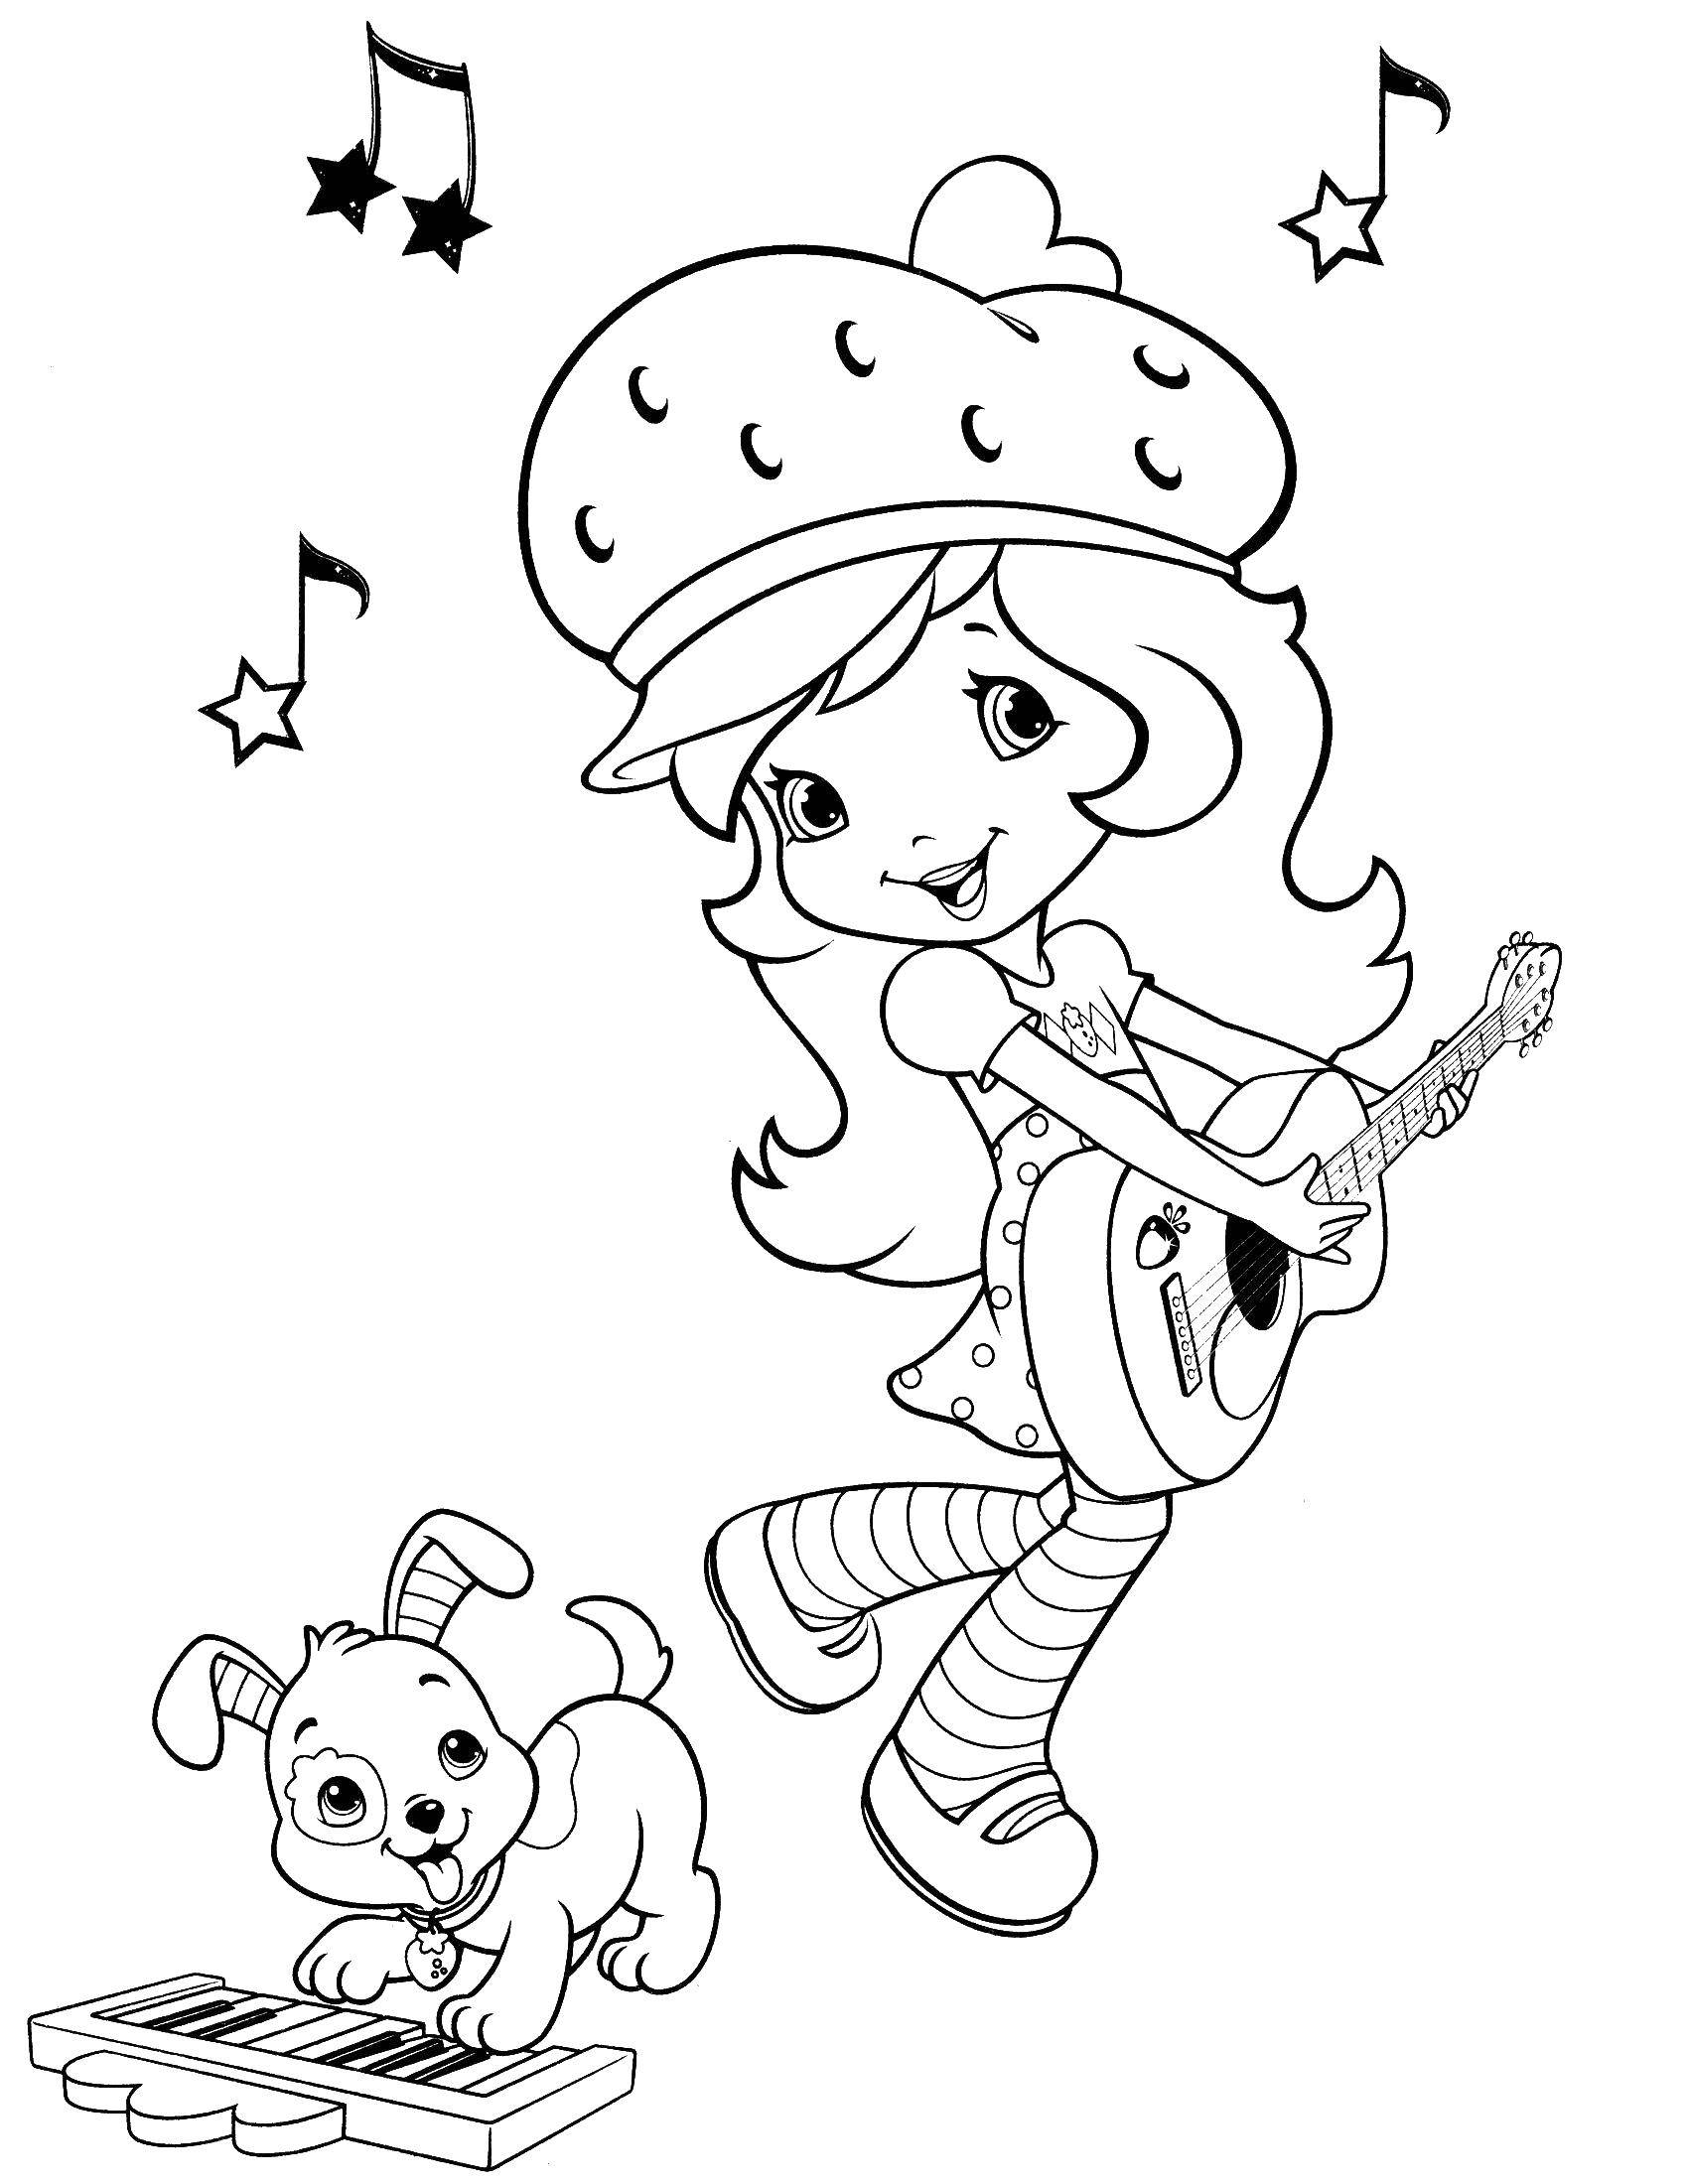 Название: Раскраска Шарлотта земляничка играет на гитаре. Категория: шарлотта земляничка мультики. Теги: шарлотта, земляничка, мультики.